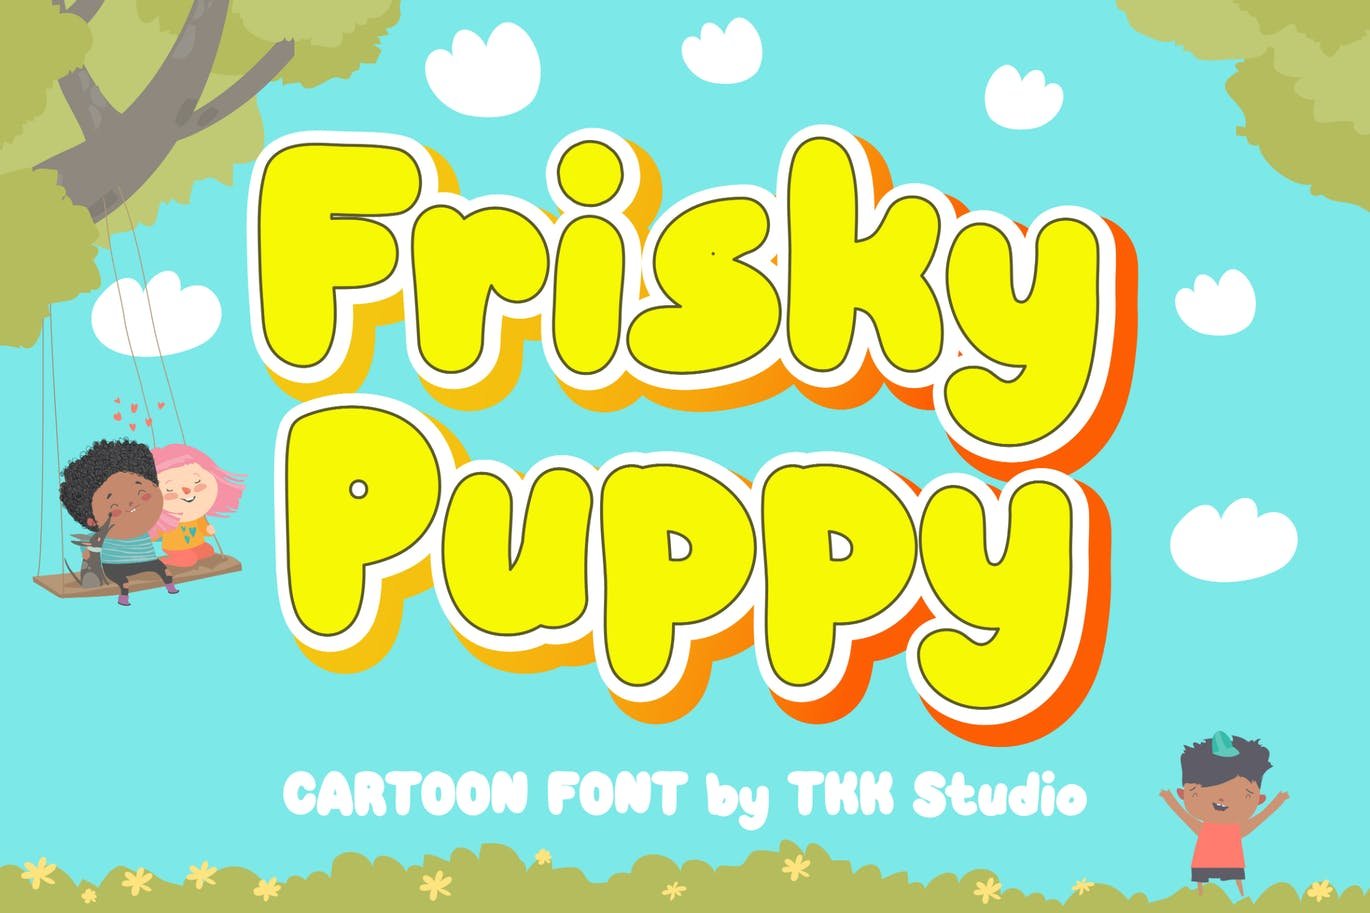 frisky puppy cartoon font1 387